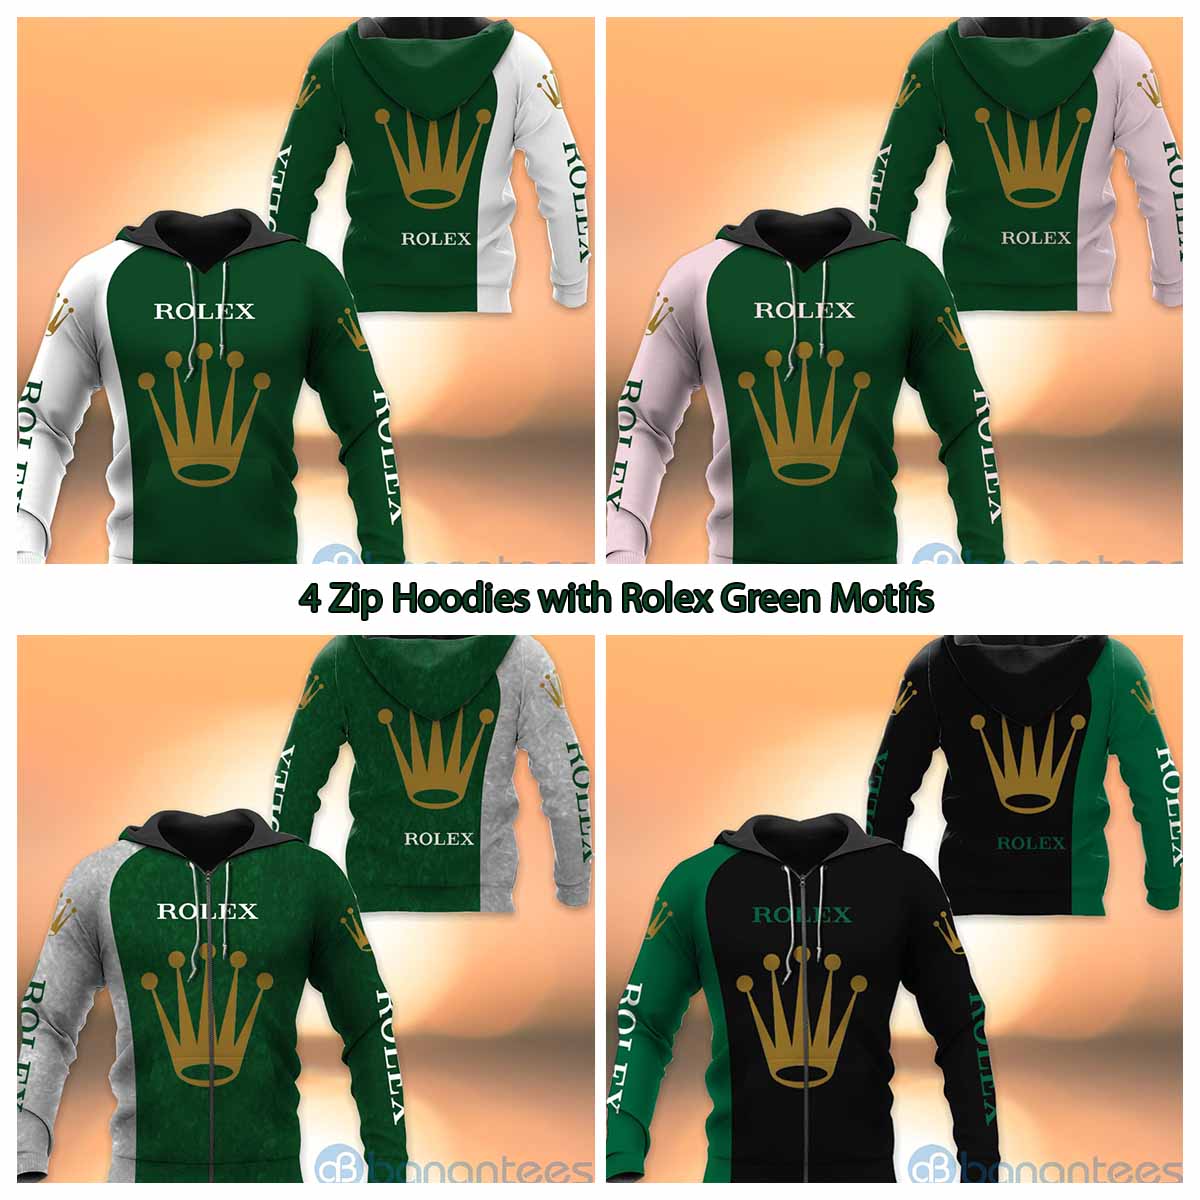 4 Zip Hoodies with Rolex Green Motifs